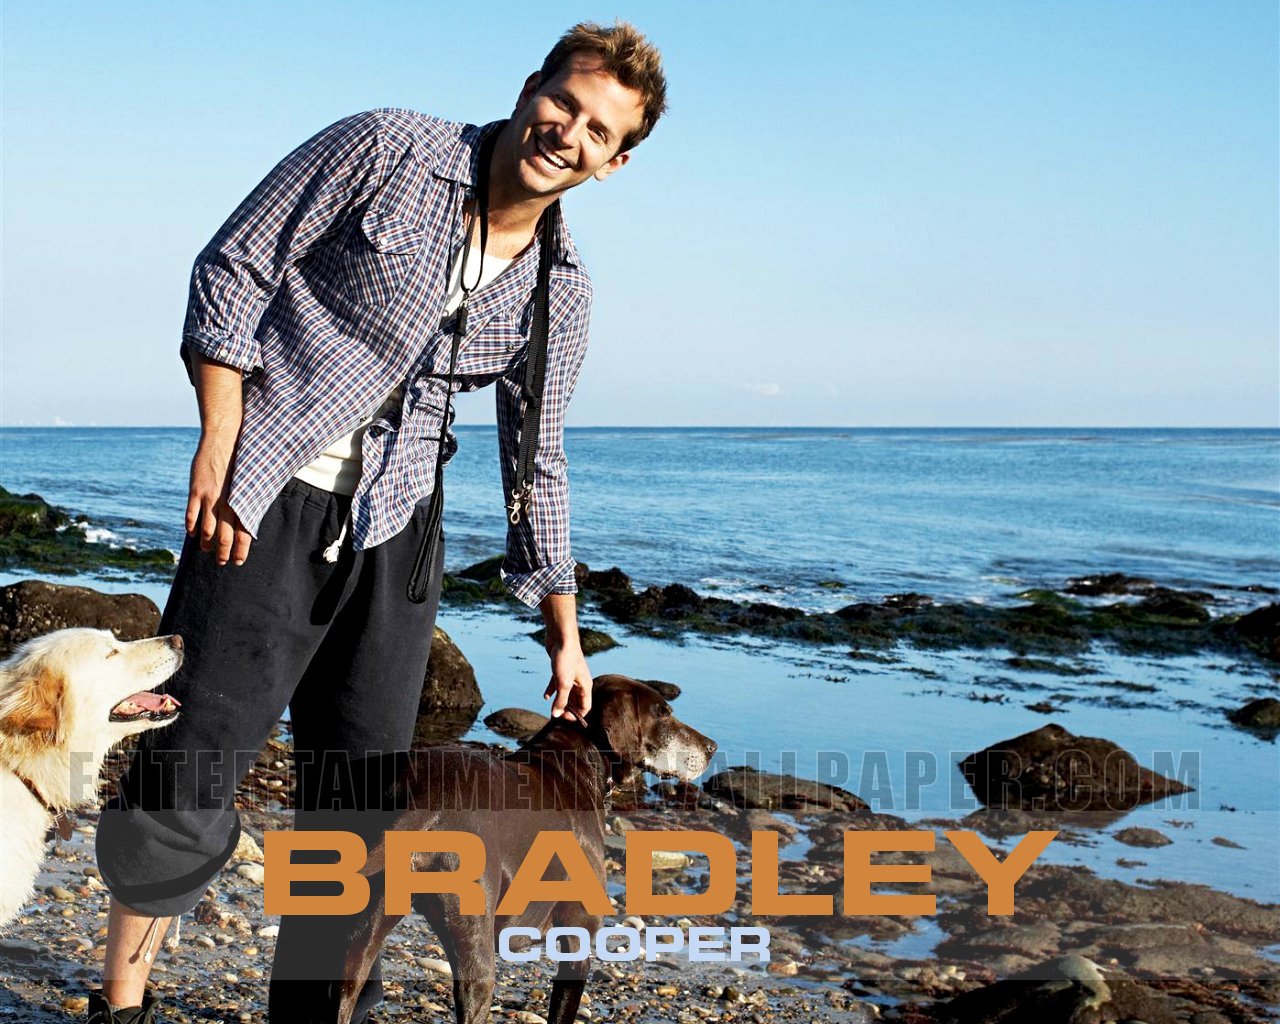 bradley cooper   Bradley Cooper Wallpaper 23904577 1280x1024